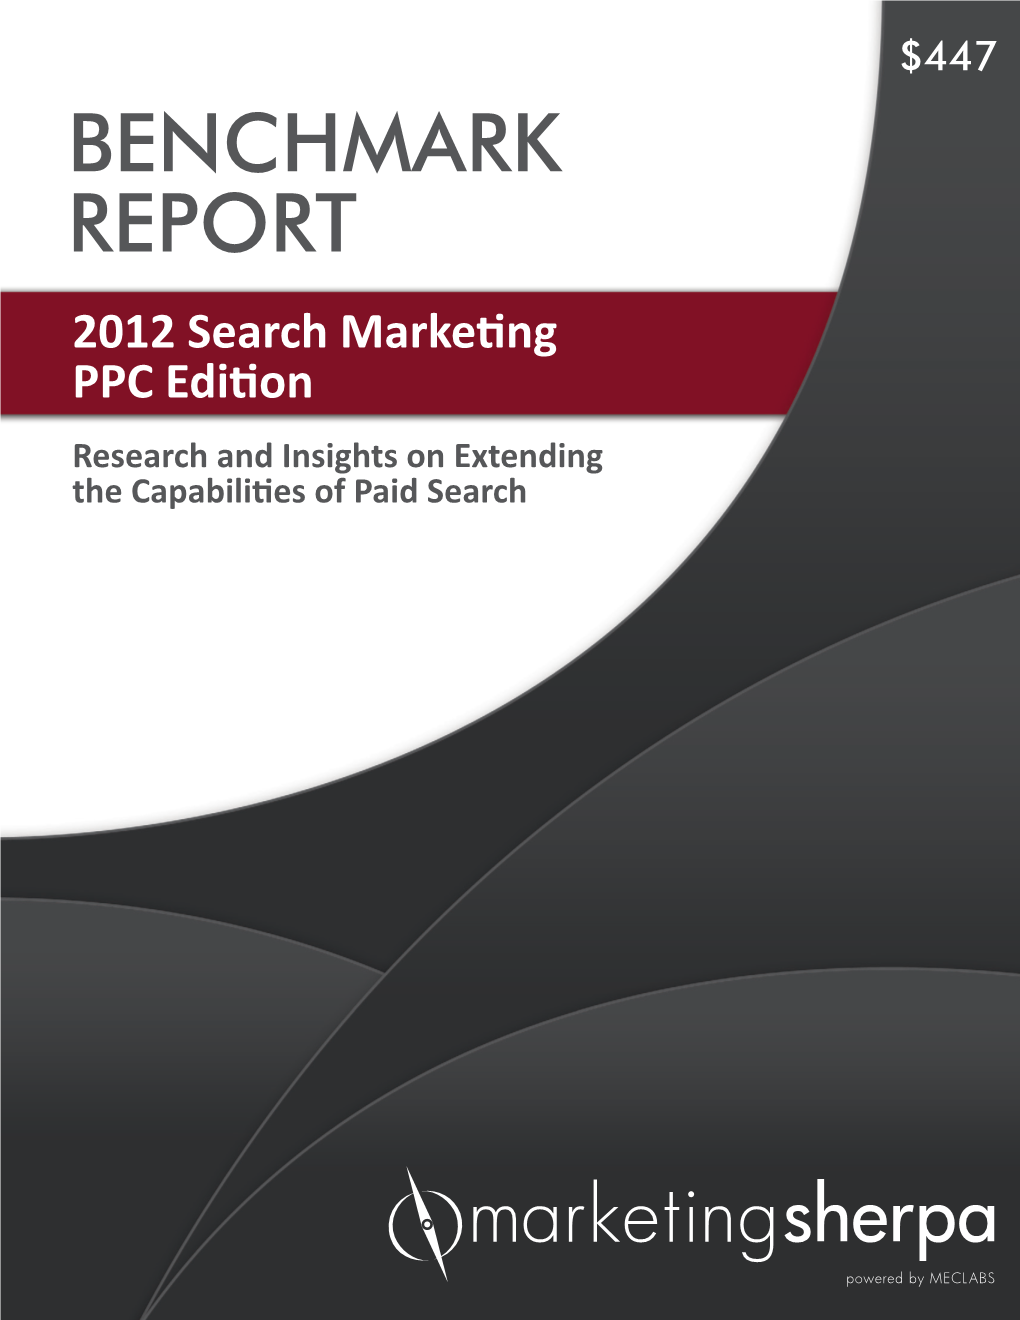 2012 Search Marketing Benchmark Report – PPC Edition